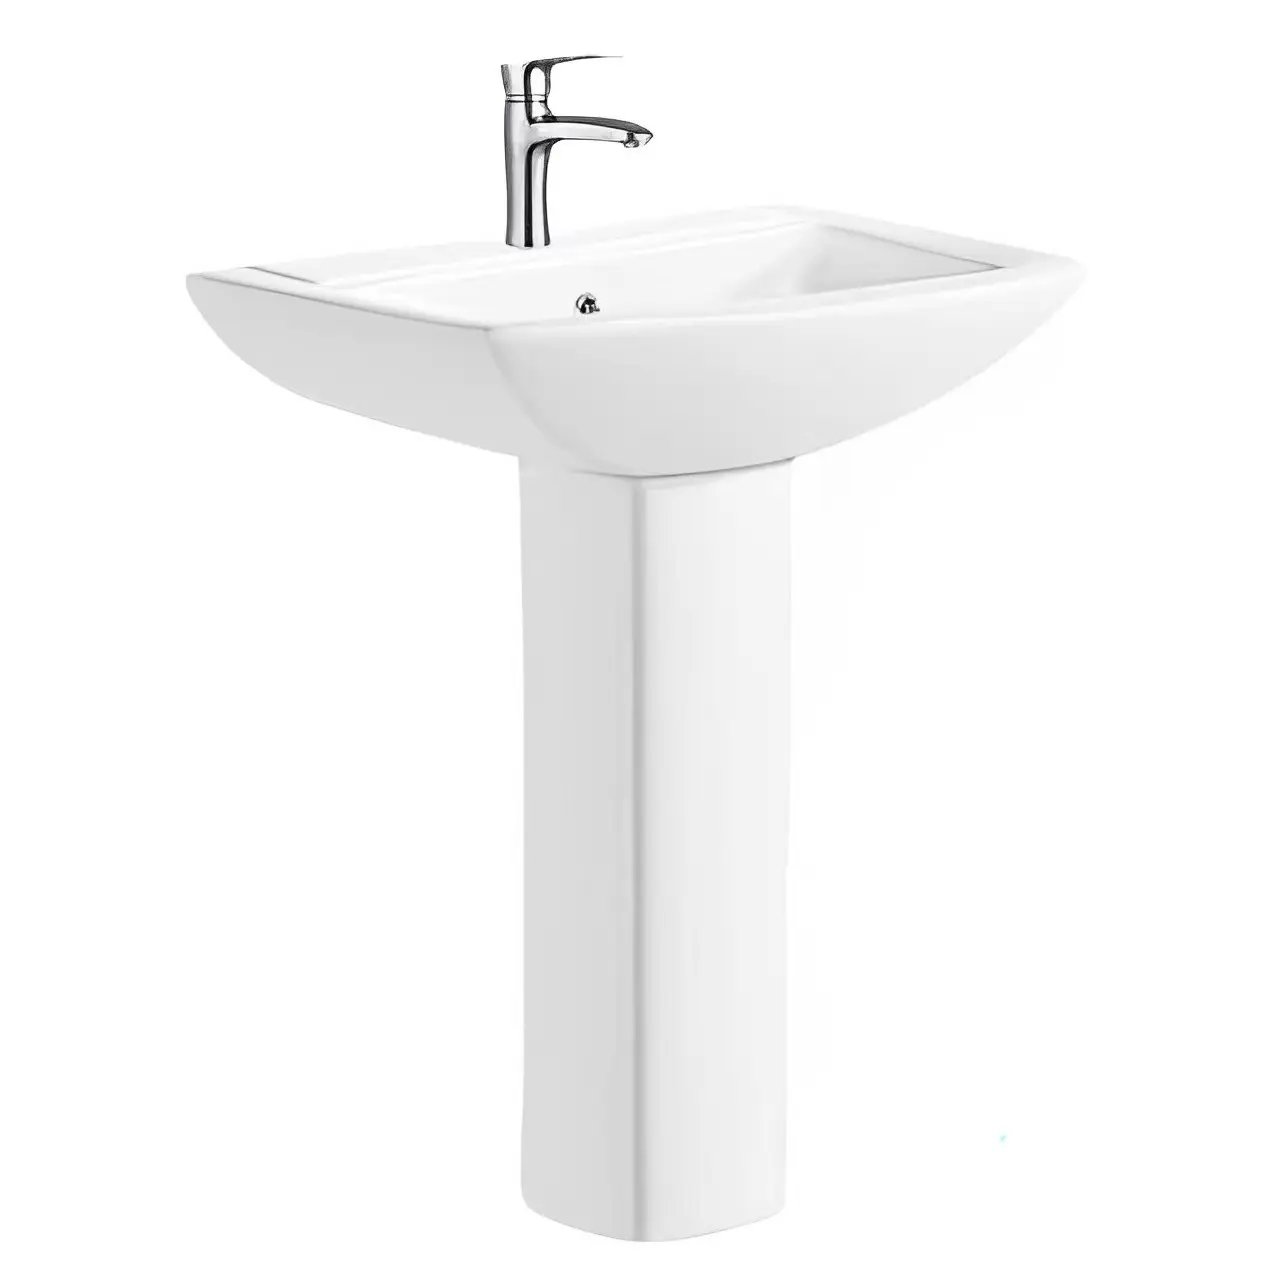 New Trend Lavabo Columna Art Pedestal Ceramic Bathroom Sinks Two Piece Freestanding Hand Wash Basin With Pedestal